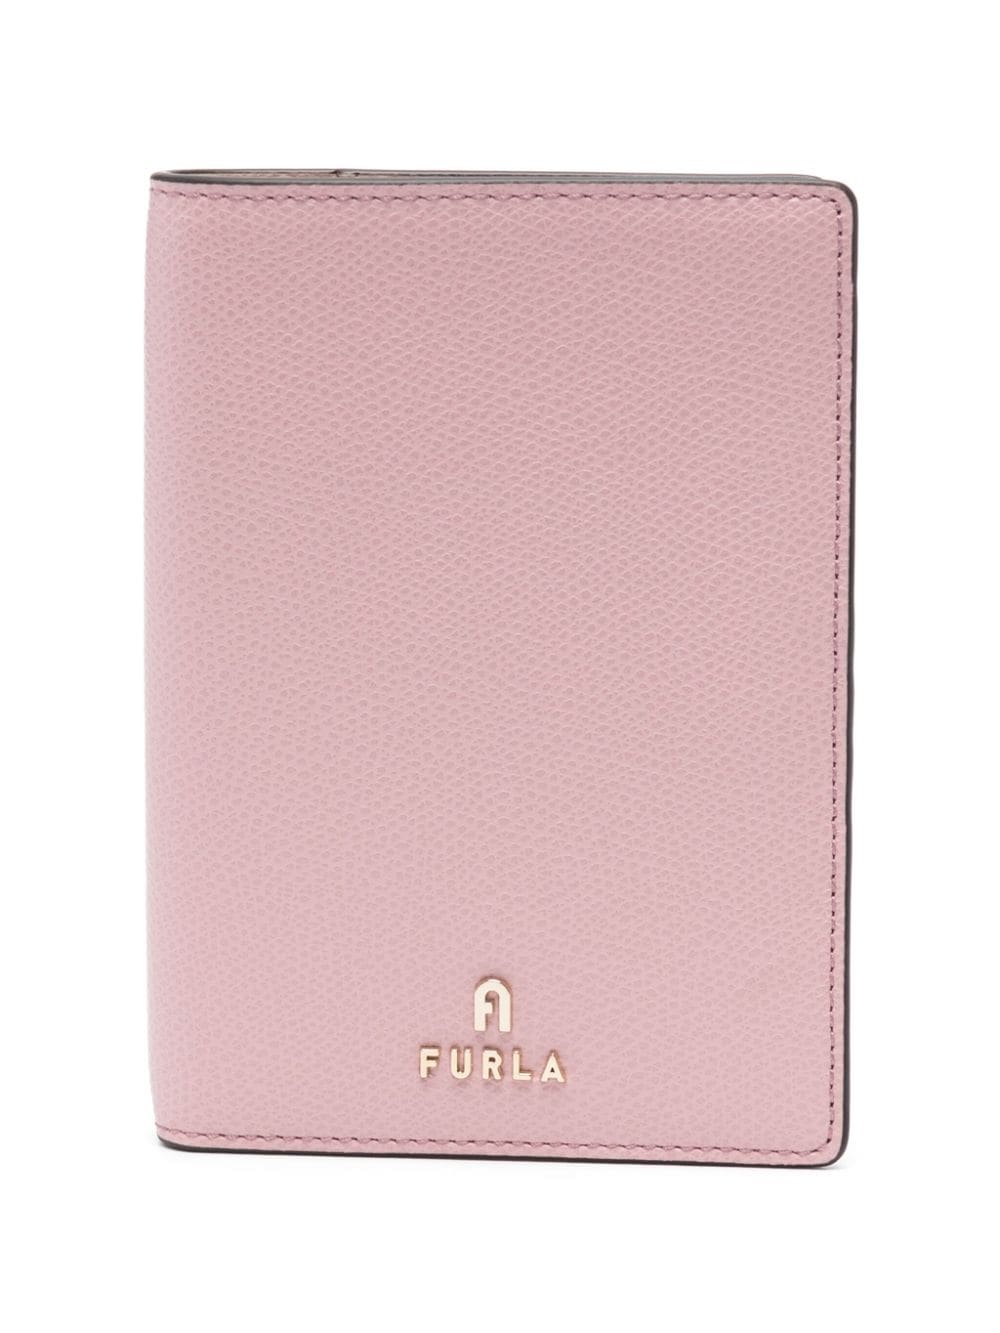 Furla bi-fold leather wallet - Pink von Furla